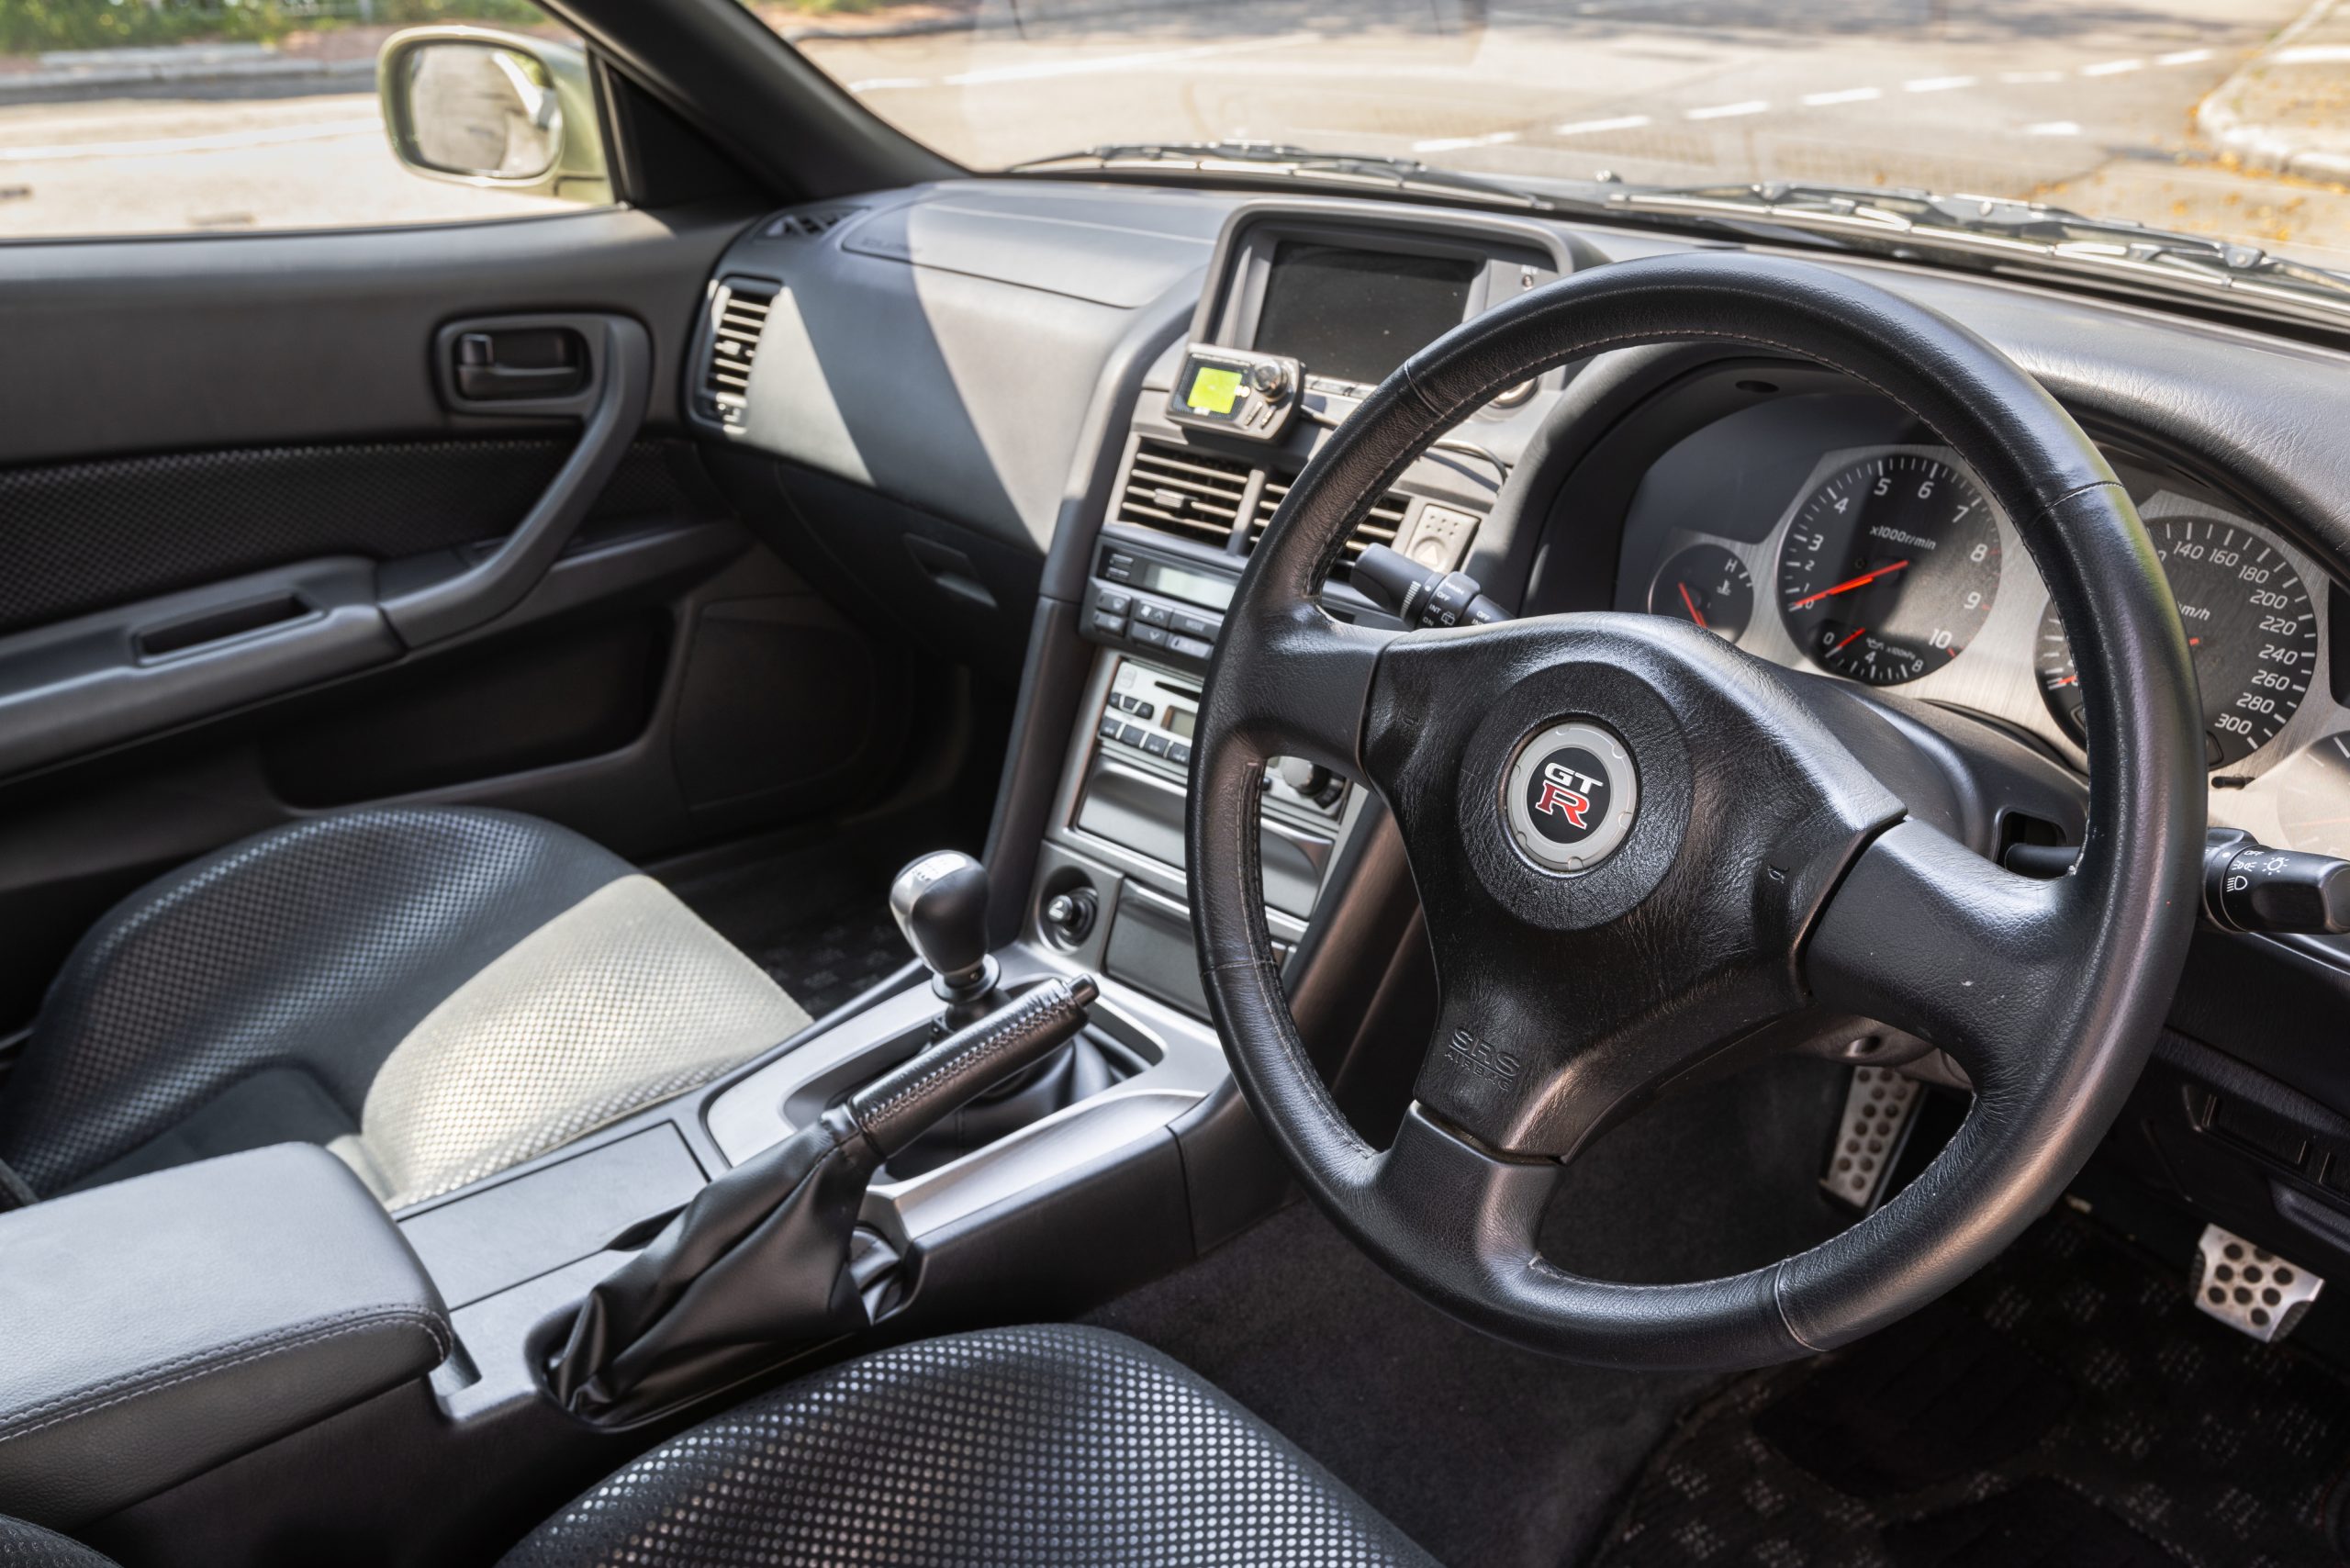 Nissan Skyline GT-R interior